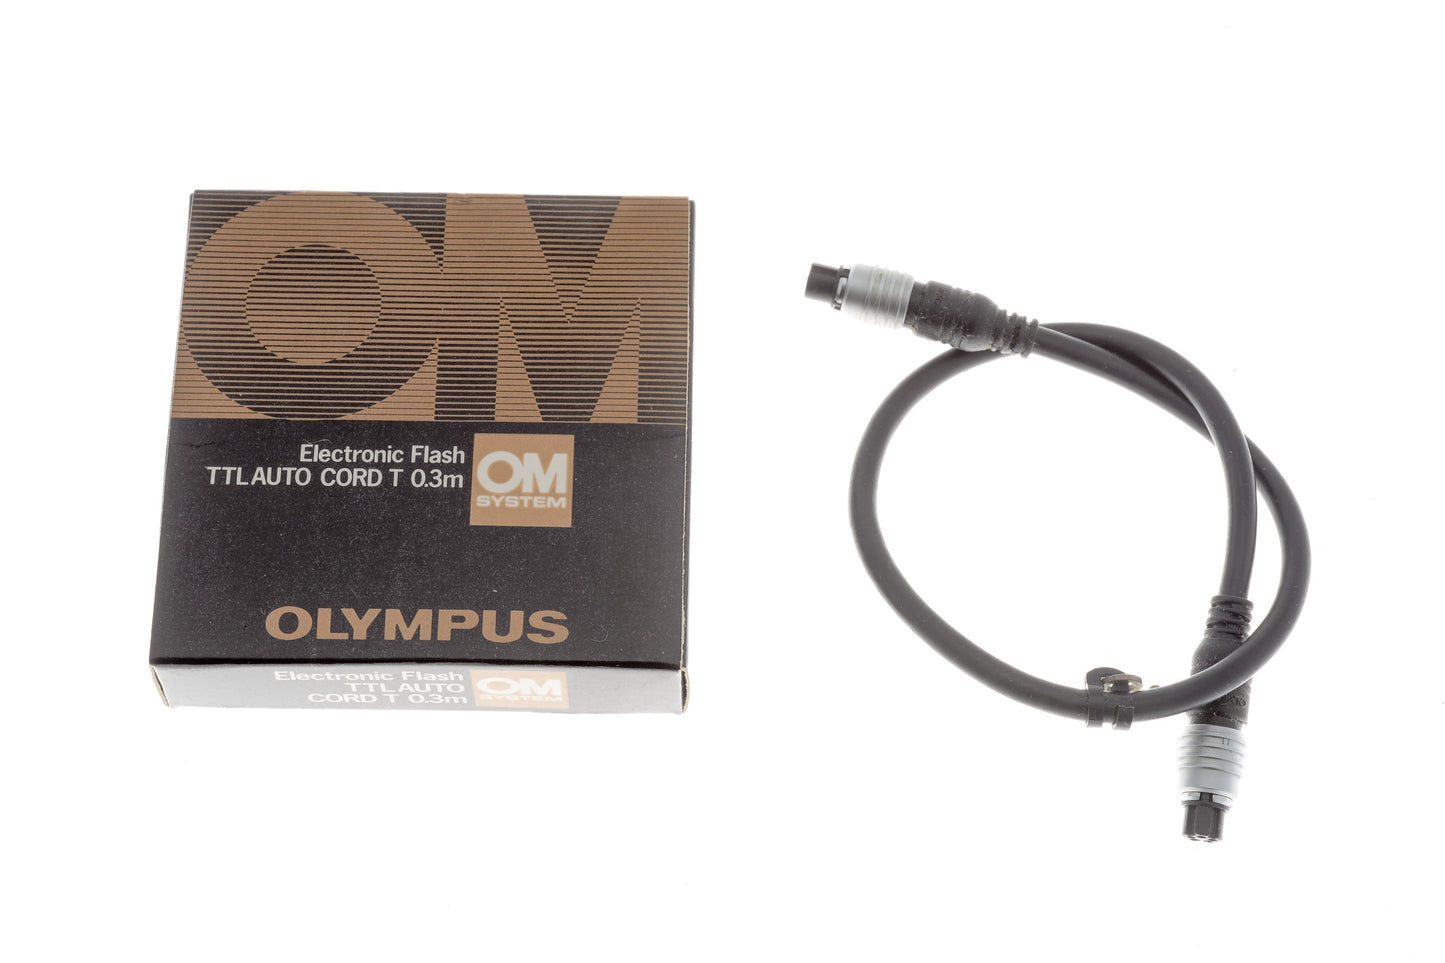 Olympus TTL Auto Cord T 0.3m - Accessory